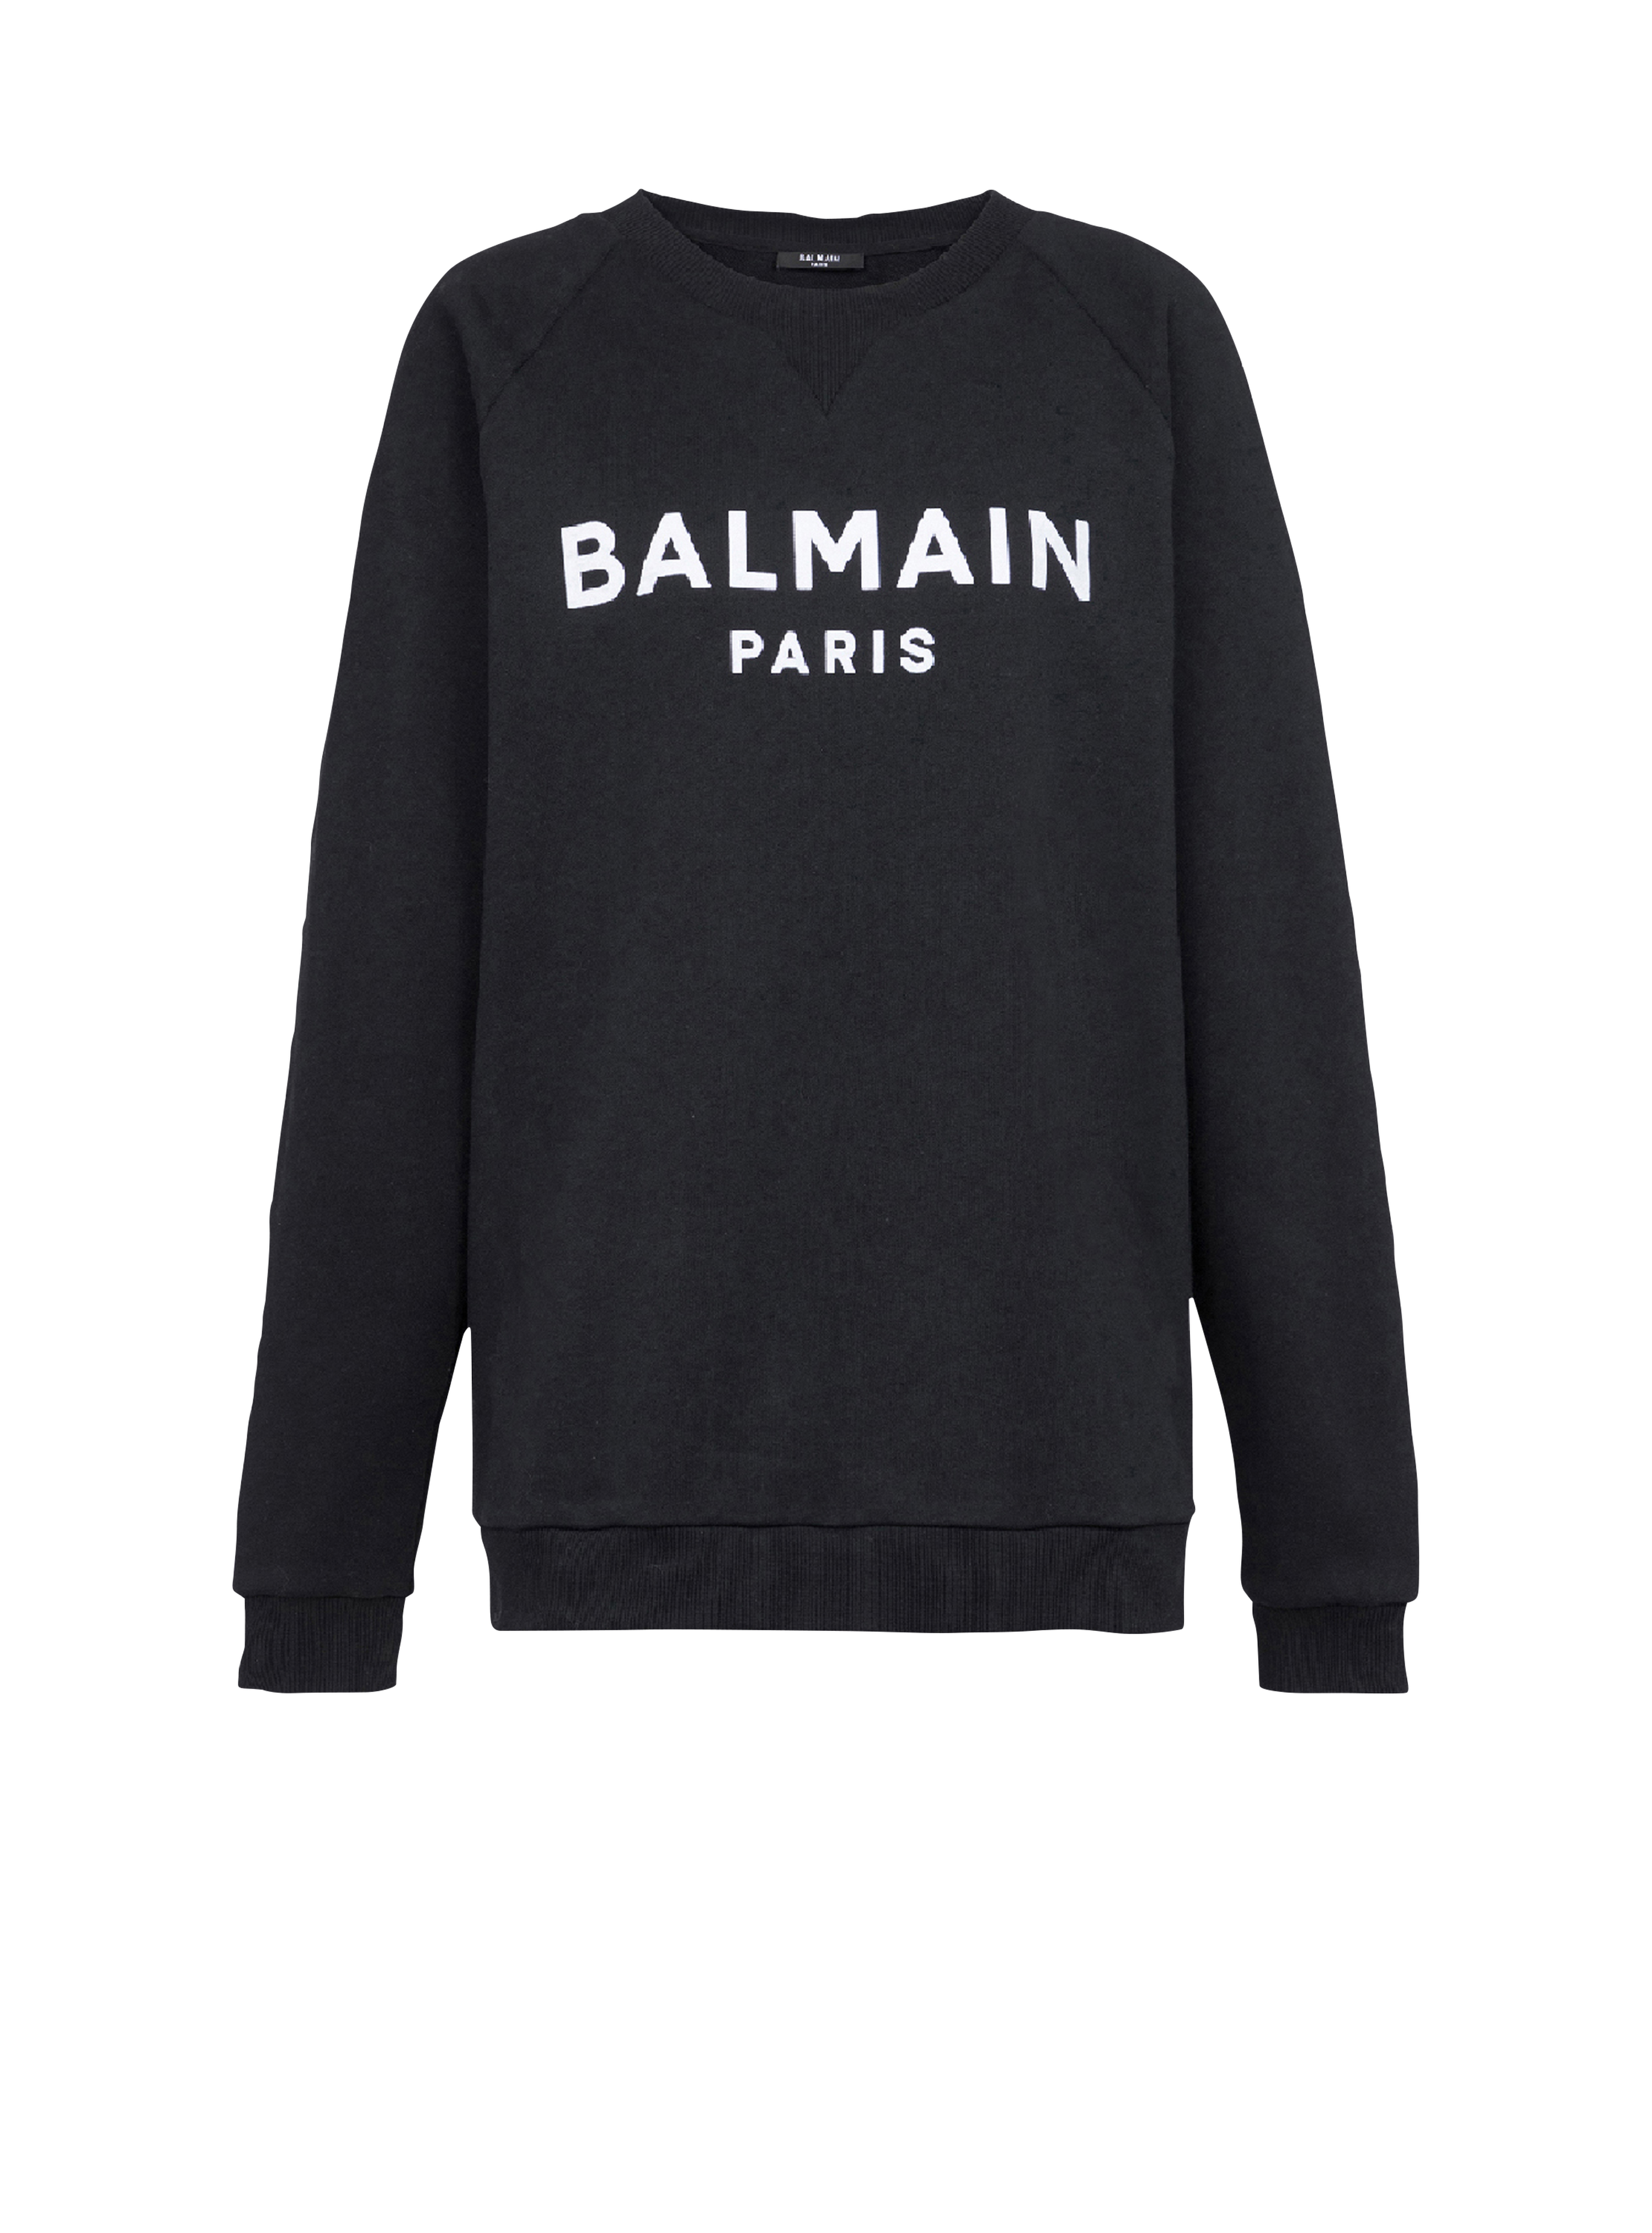 Cotton eco-designed sweatshirt with flocked Balmain logo, black